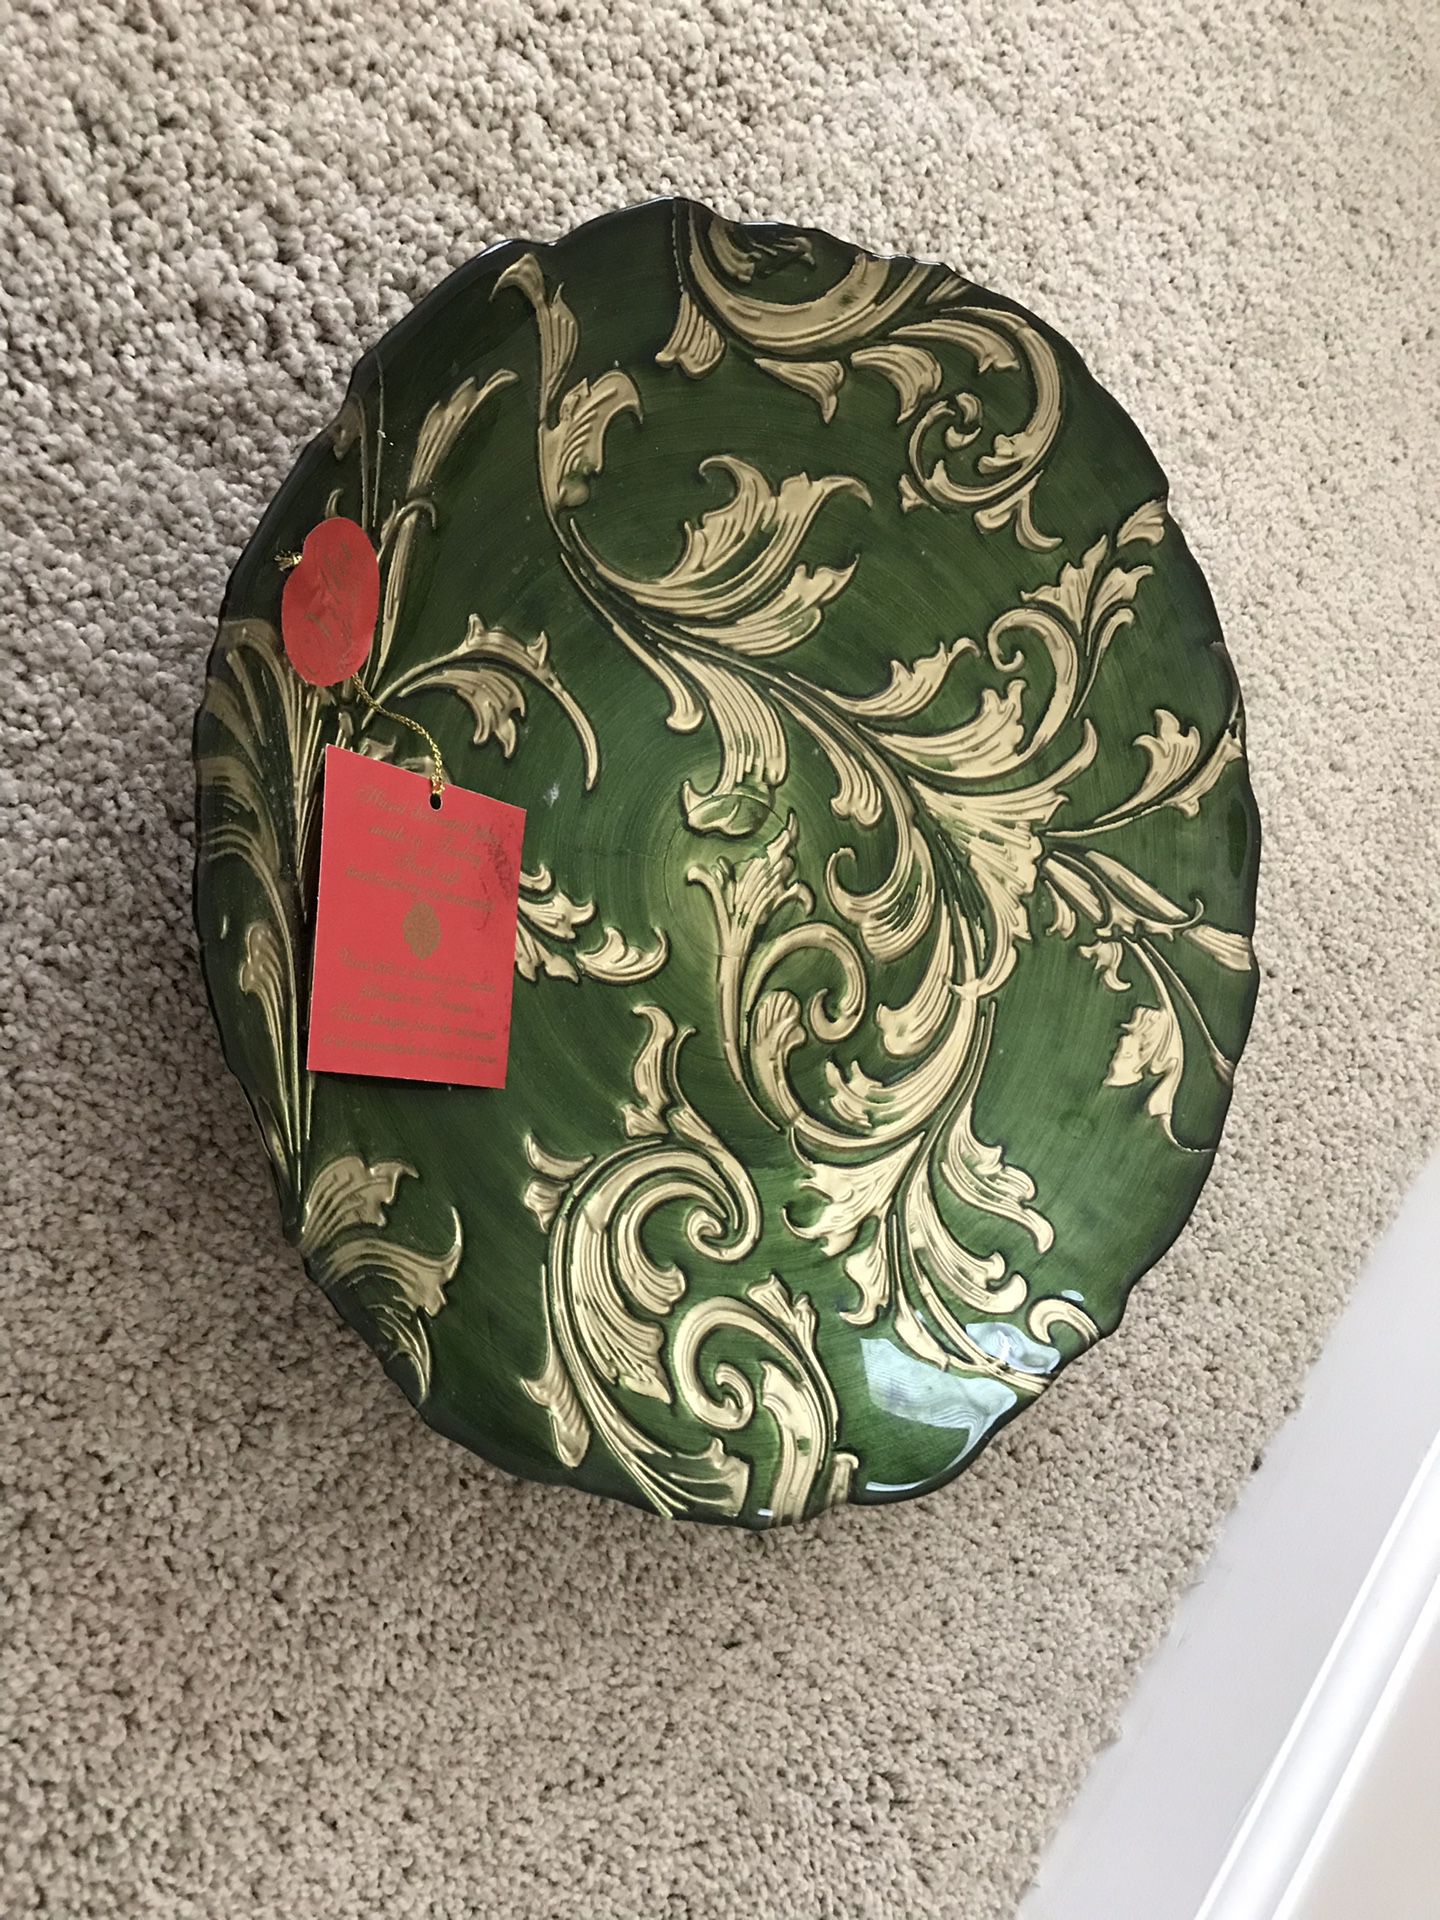 Decorative plate for Festive season